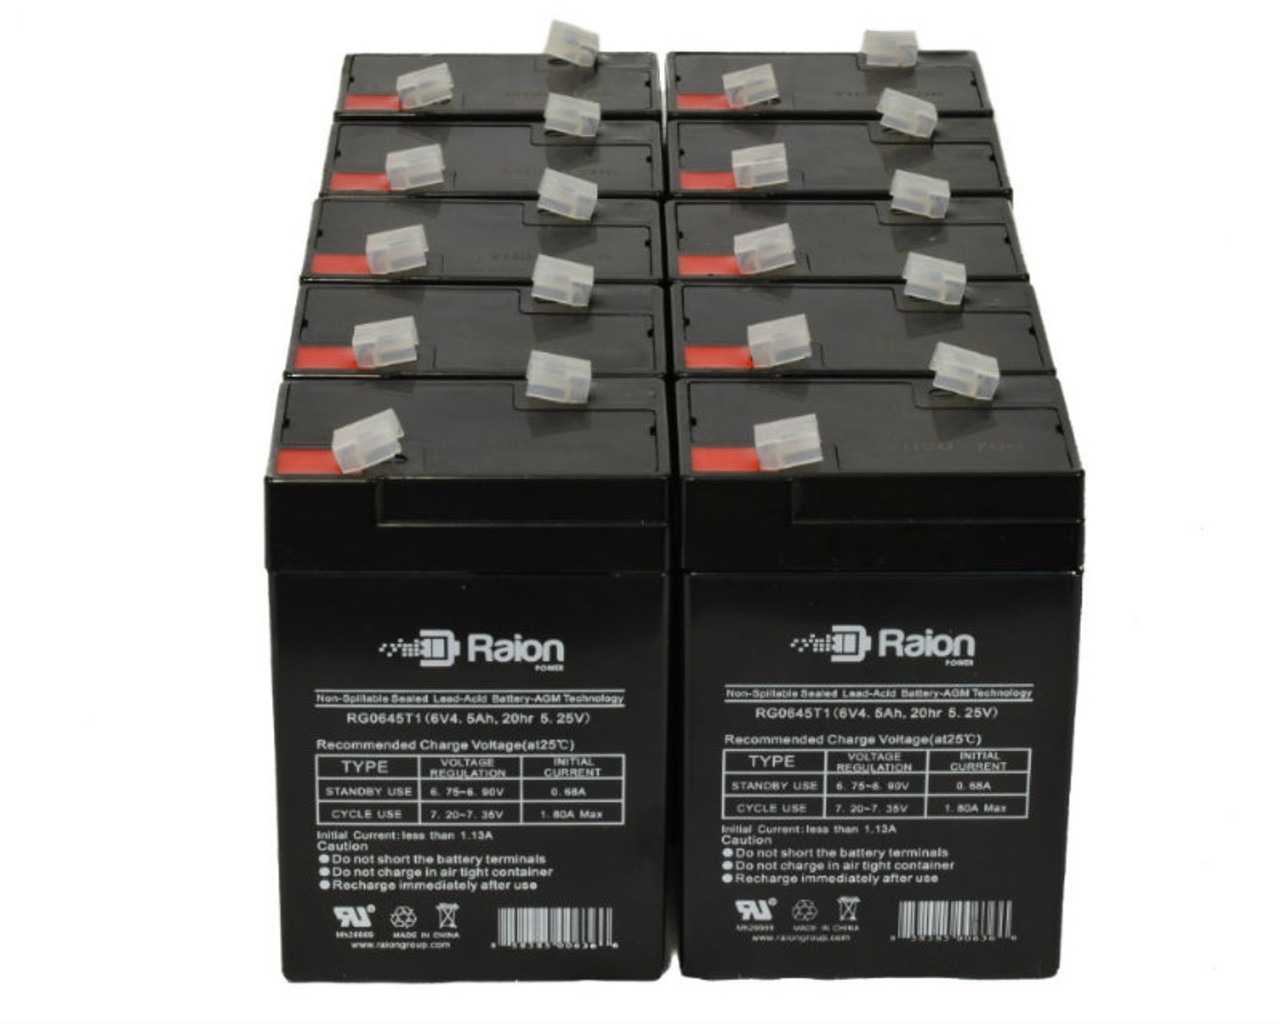 Raion Power 6V 4.5Ah Replacement Emergency Light Battery for Sonnenschein 7895391 - 10 Pack